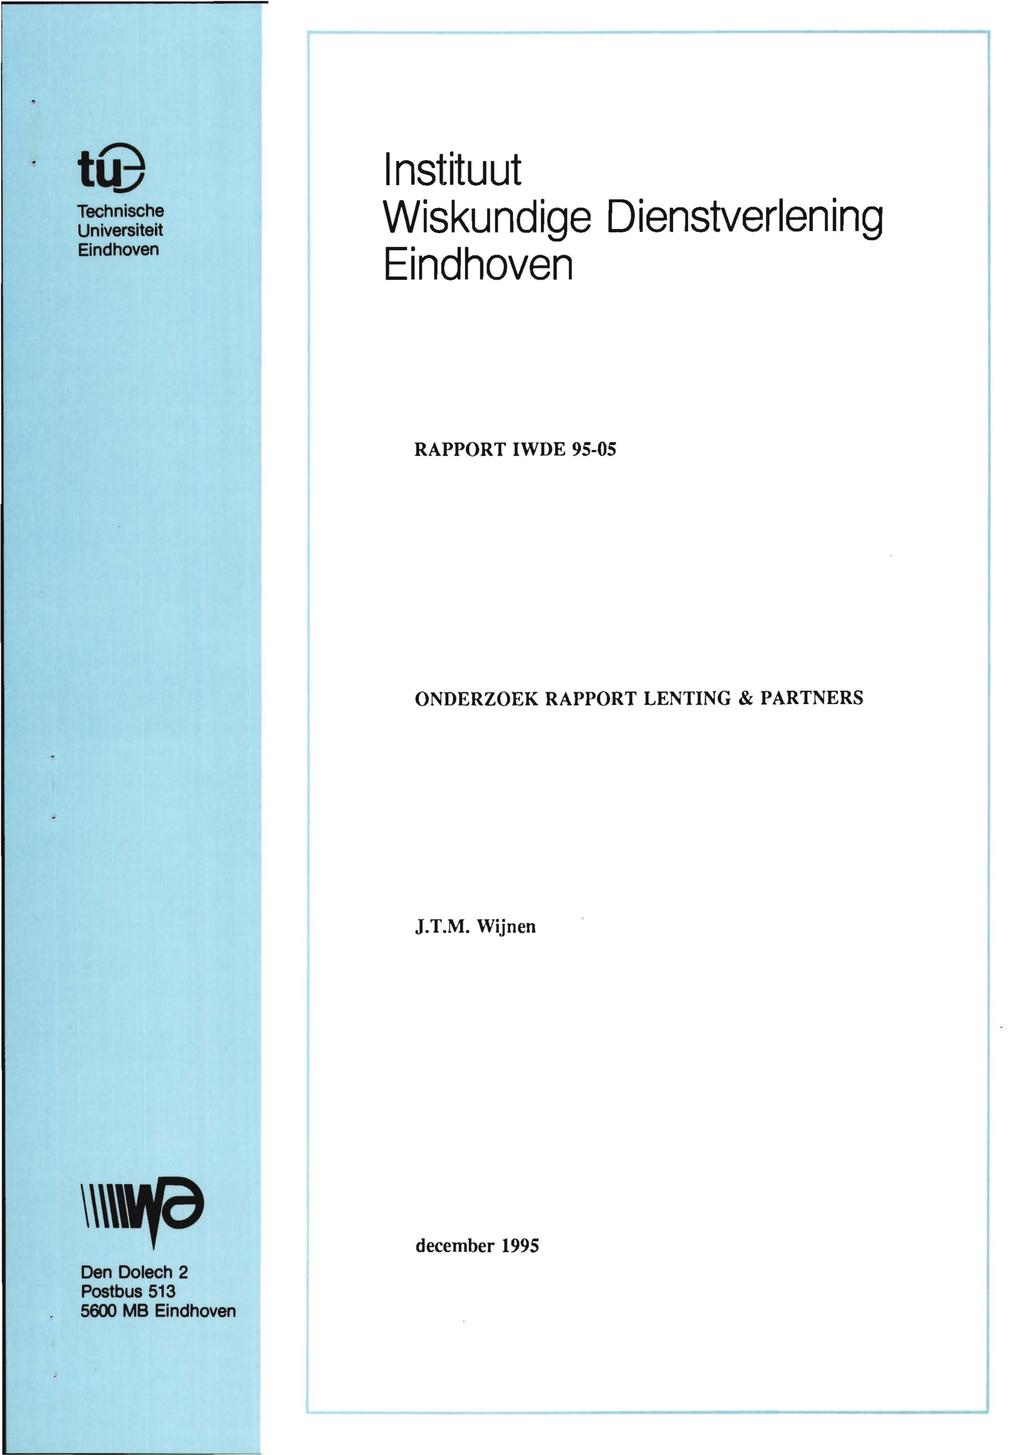 tla Technische Universiteit Eindhoven lnstituut Wiskundige Dienstverlening Eindhoven RAPPORT IWDE 95-05